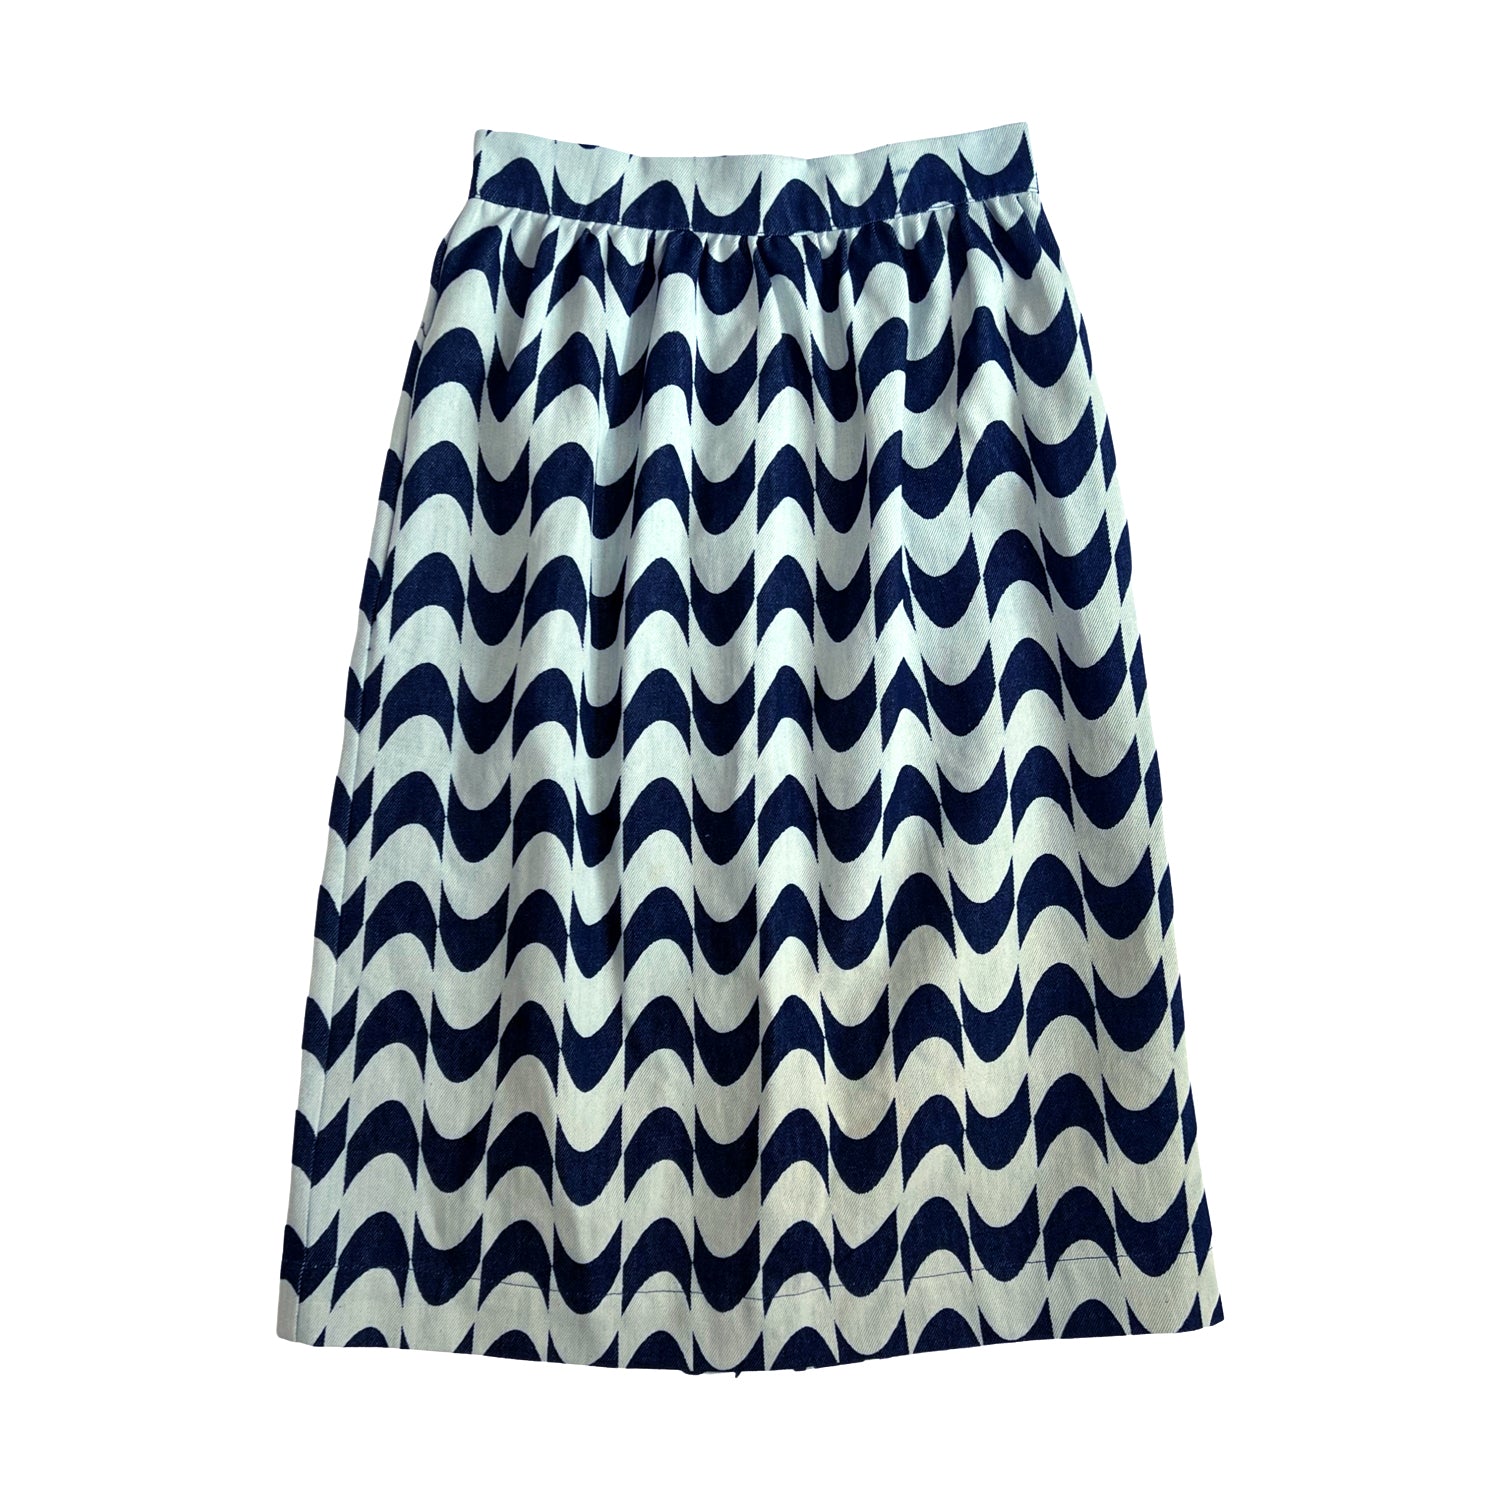 Gathered Midi Skirt in Blue Print